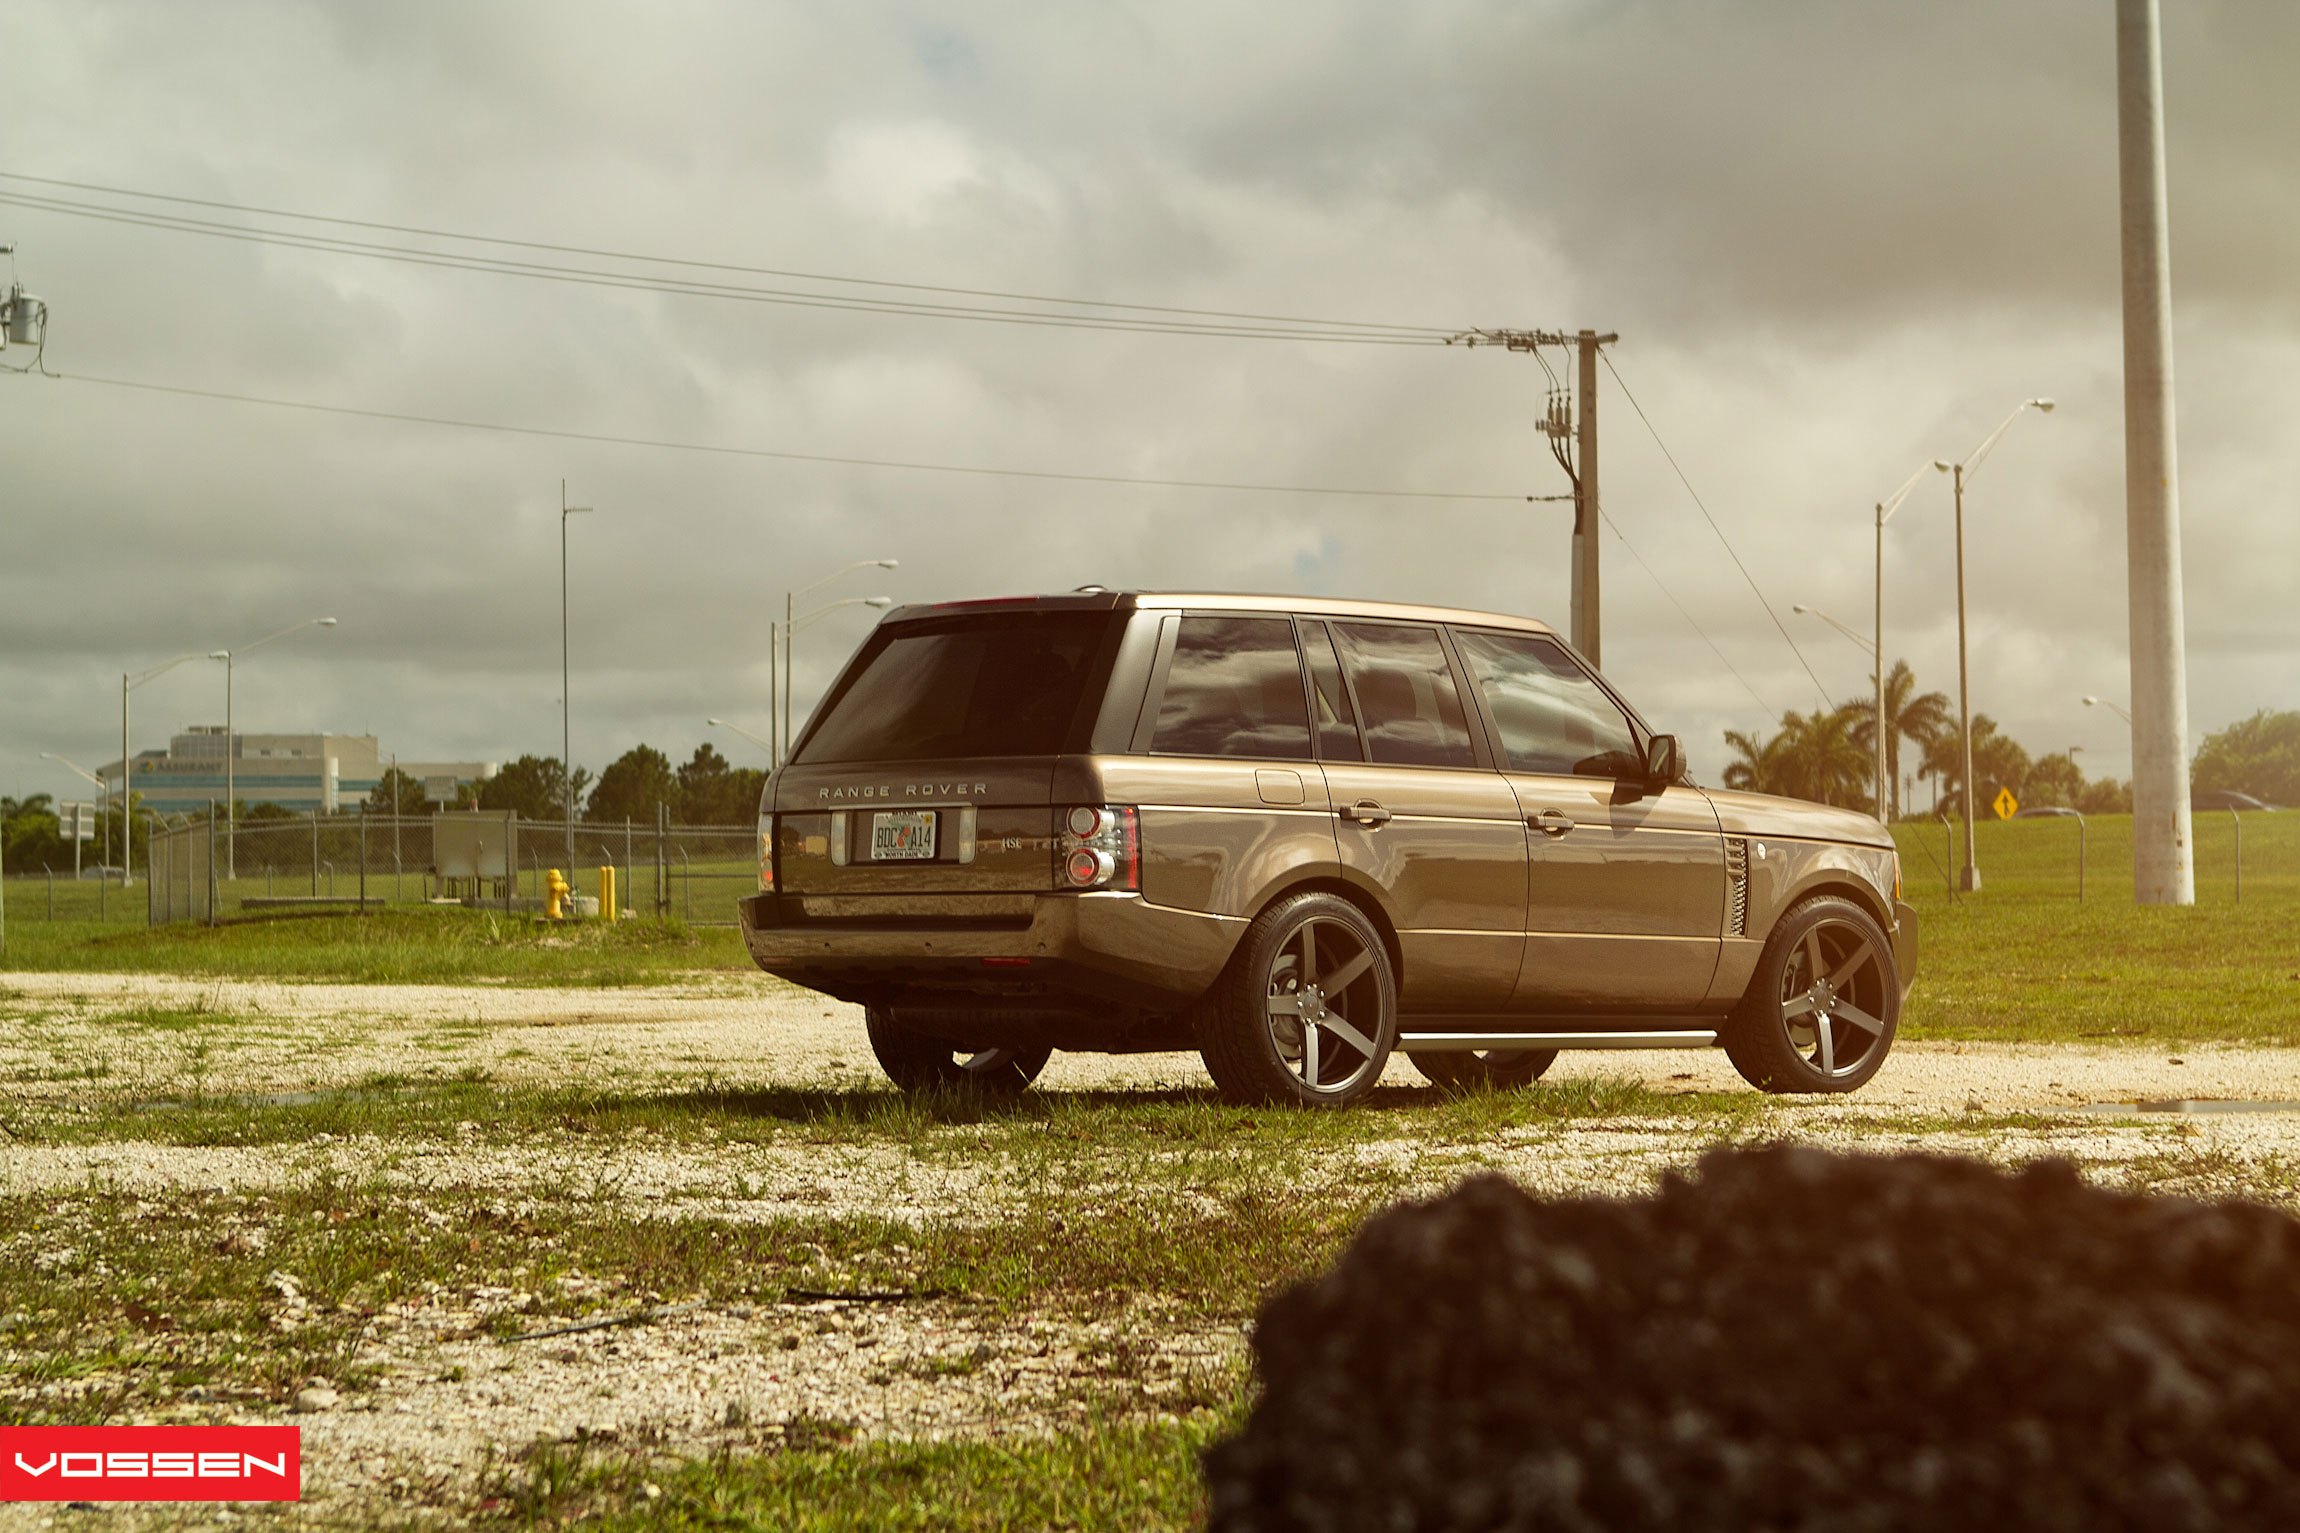 Aftermarket Rear Bumper on Land Rover Range Rover - Photo by Vossen